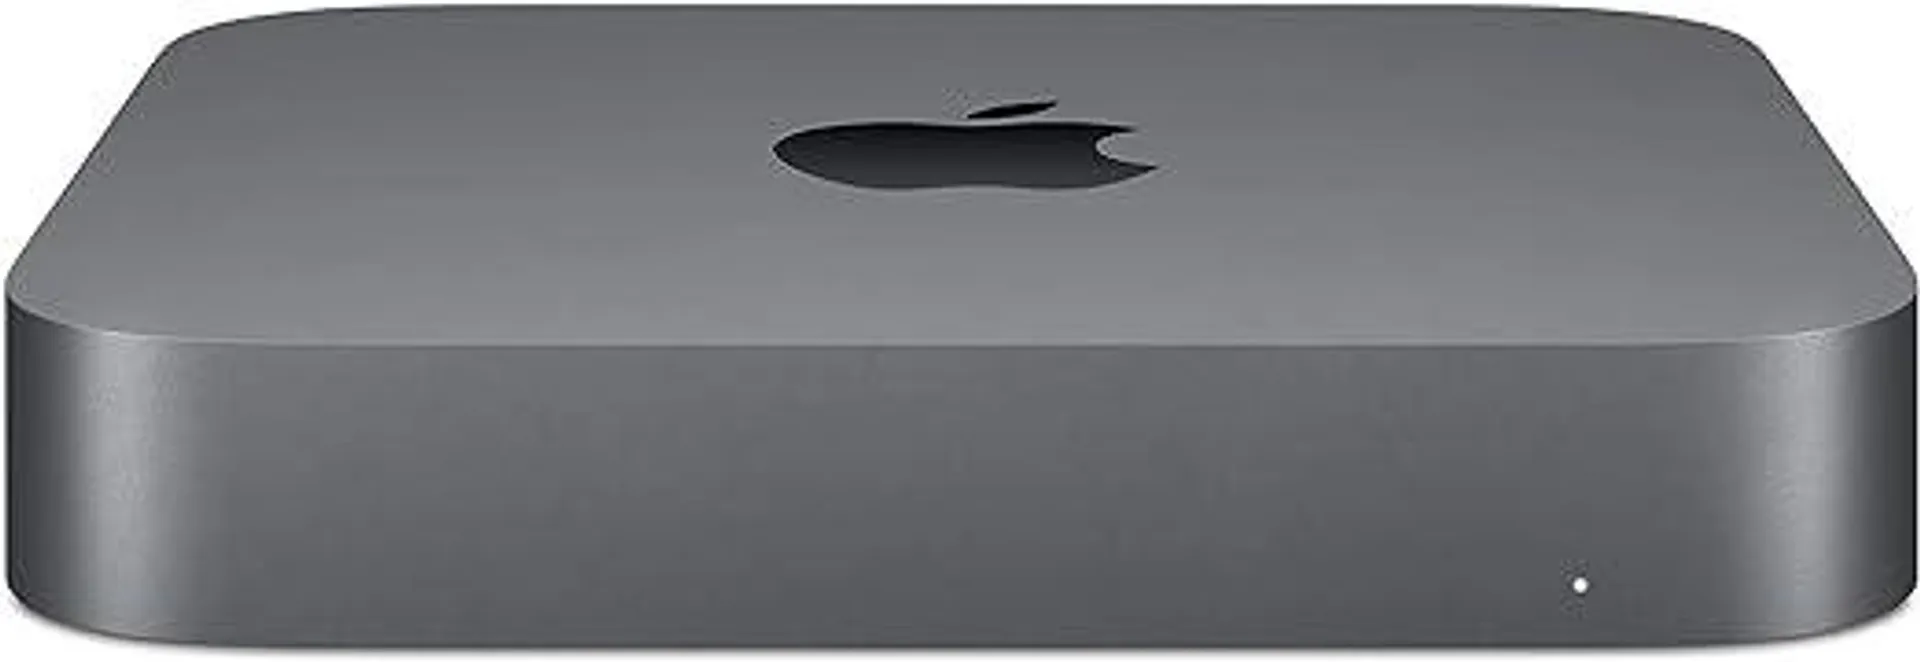 Apple Mac Mini (3.6GHz Quad-core 8th-Generation Intel Core i3 Processor, 8GB RAM, 256GB) - Previous Model